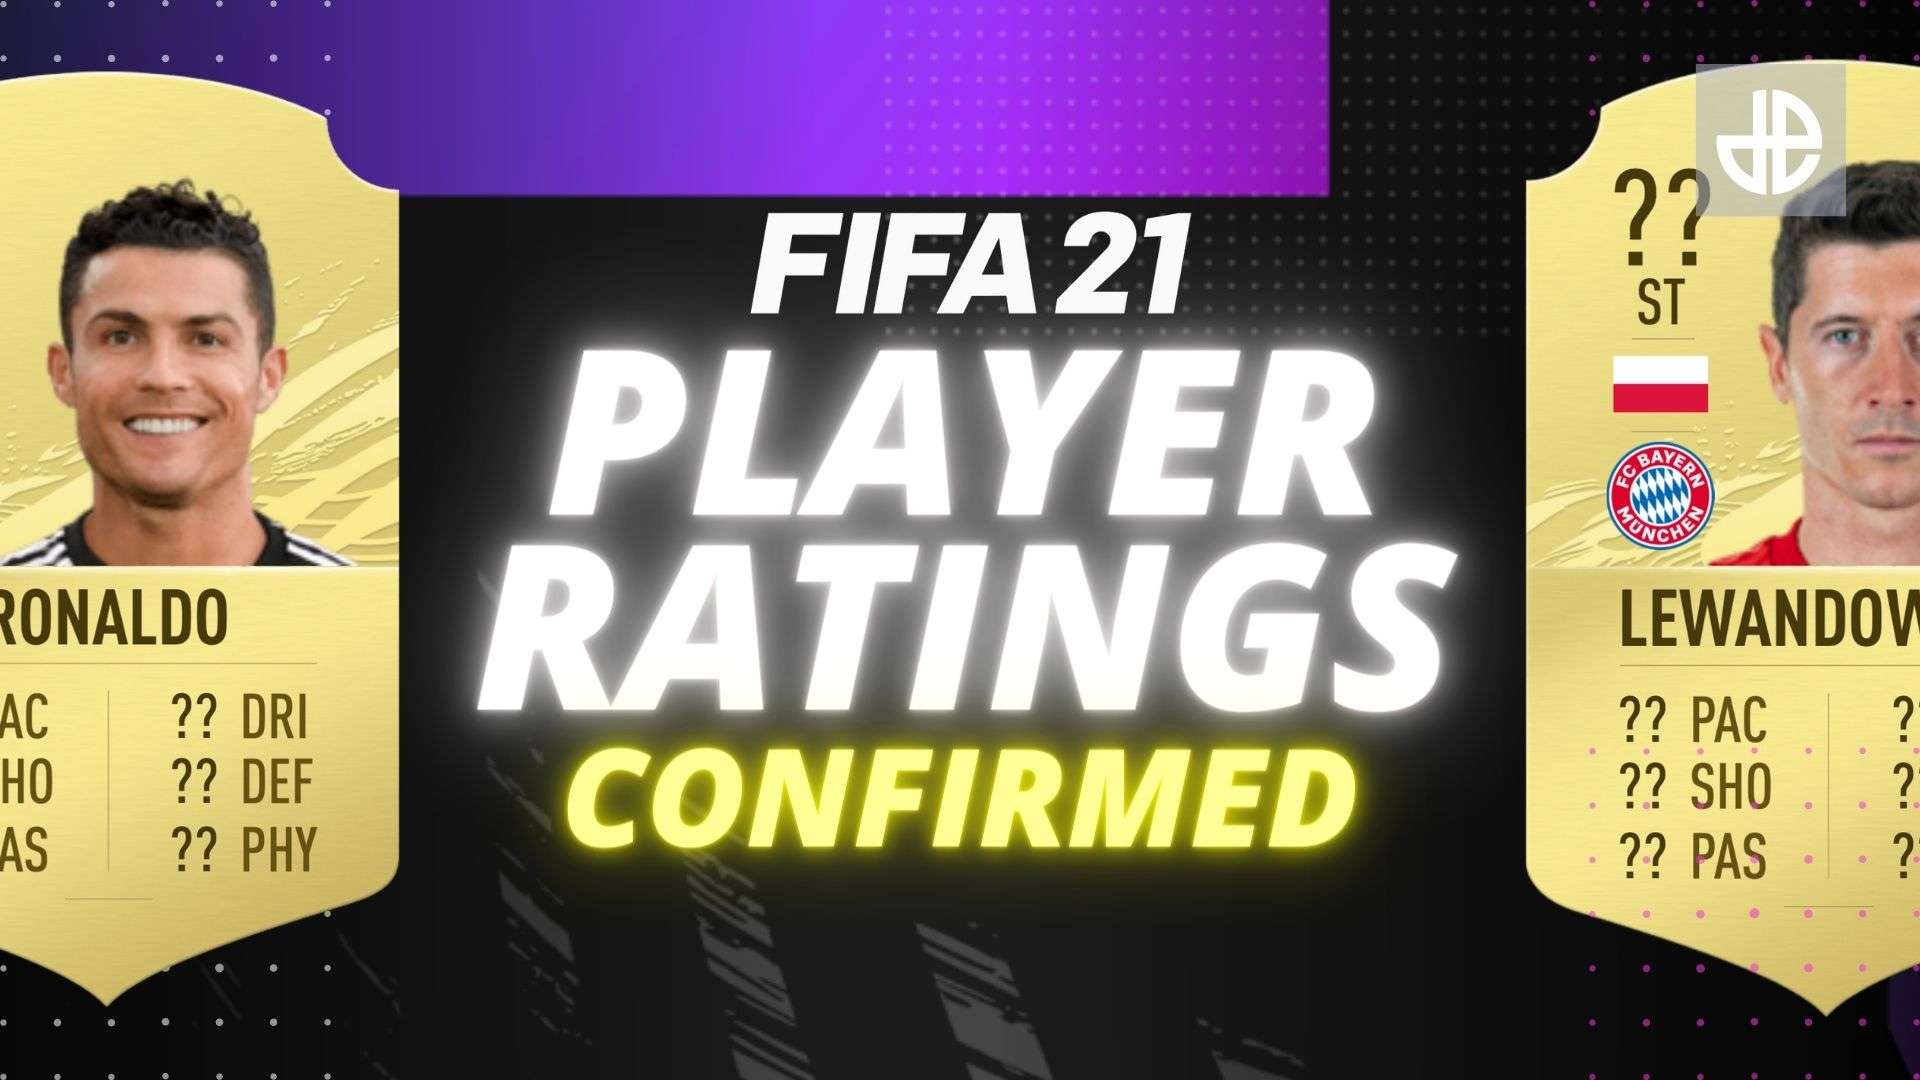 FIFA 21 ratings with Ronaldo and Lewandowski